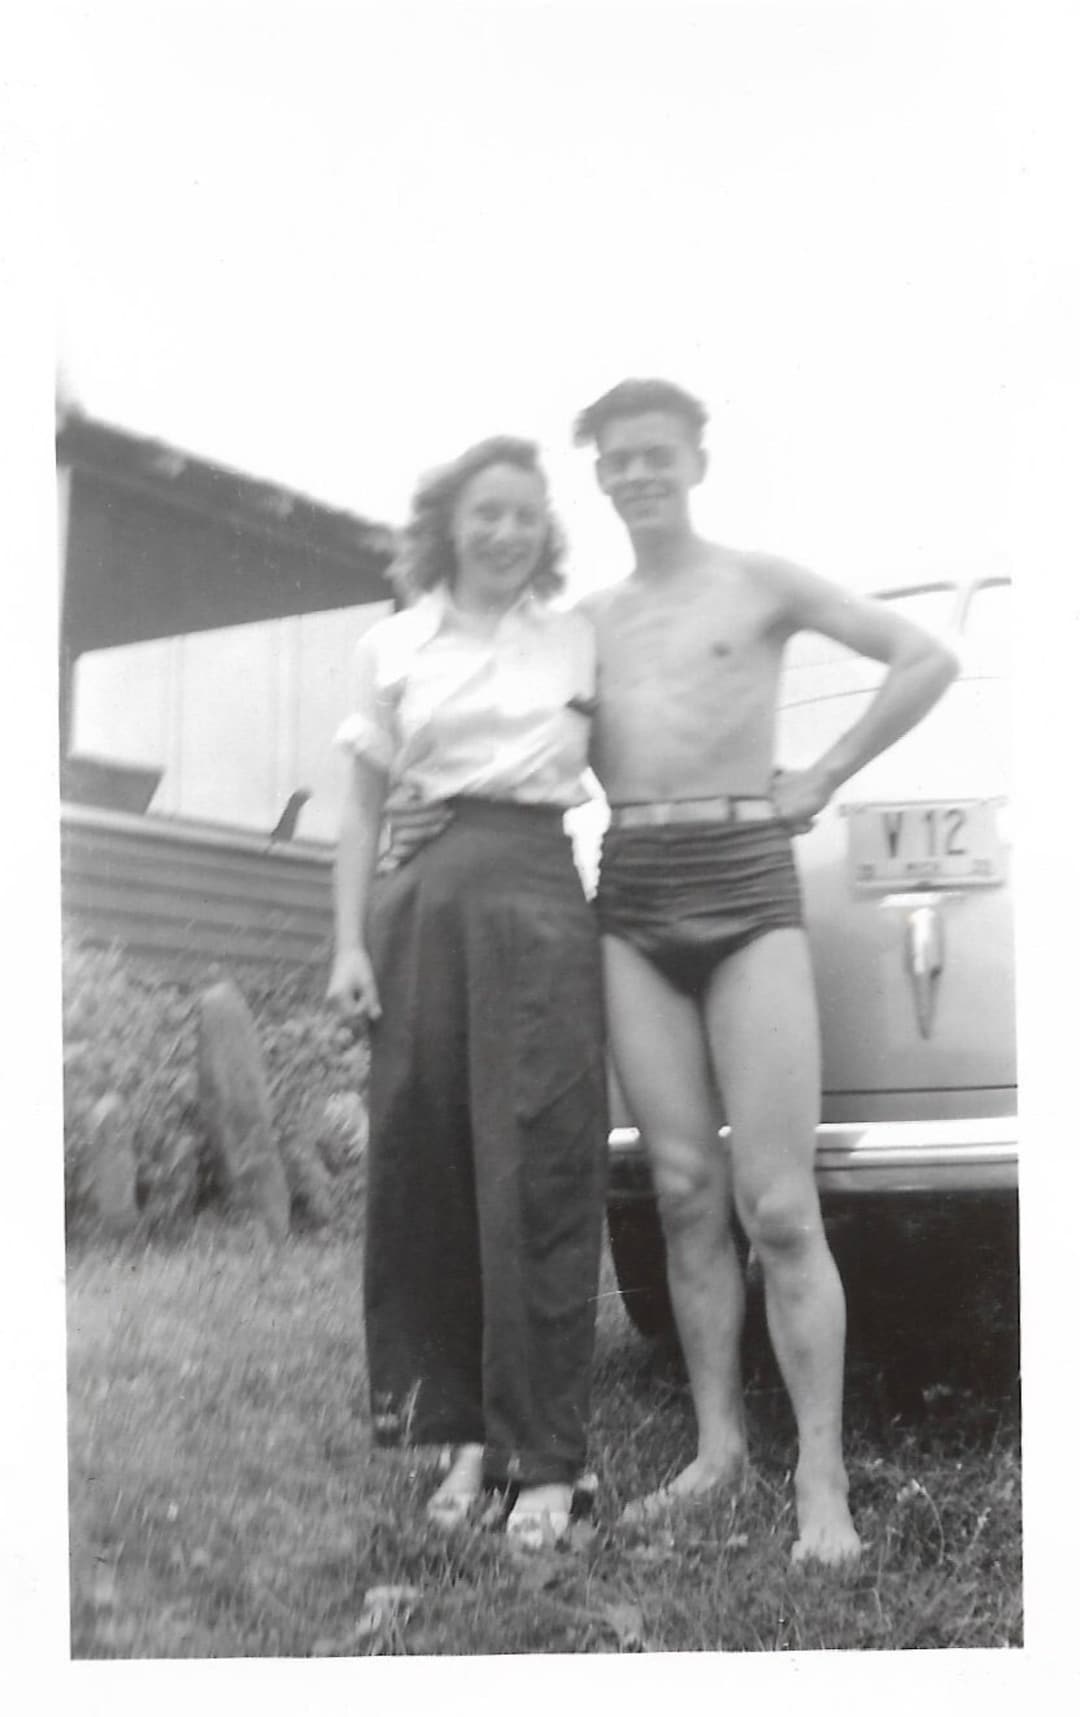 Shirtless Speedo Man Poses With Pretty Girl 1940s Snapshot